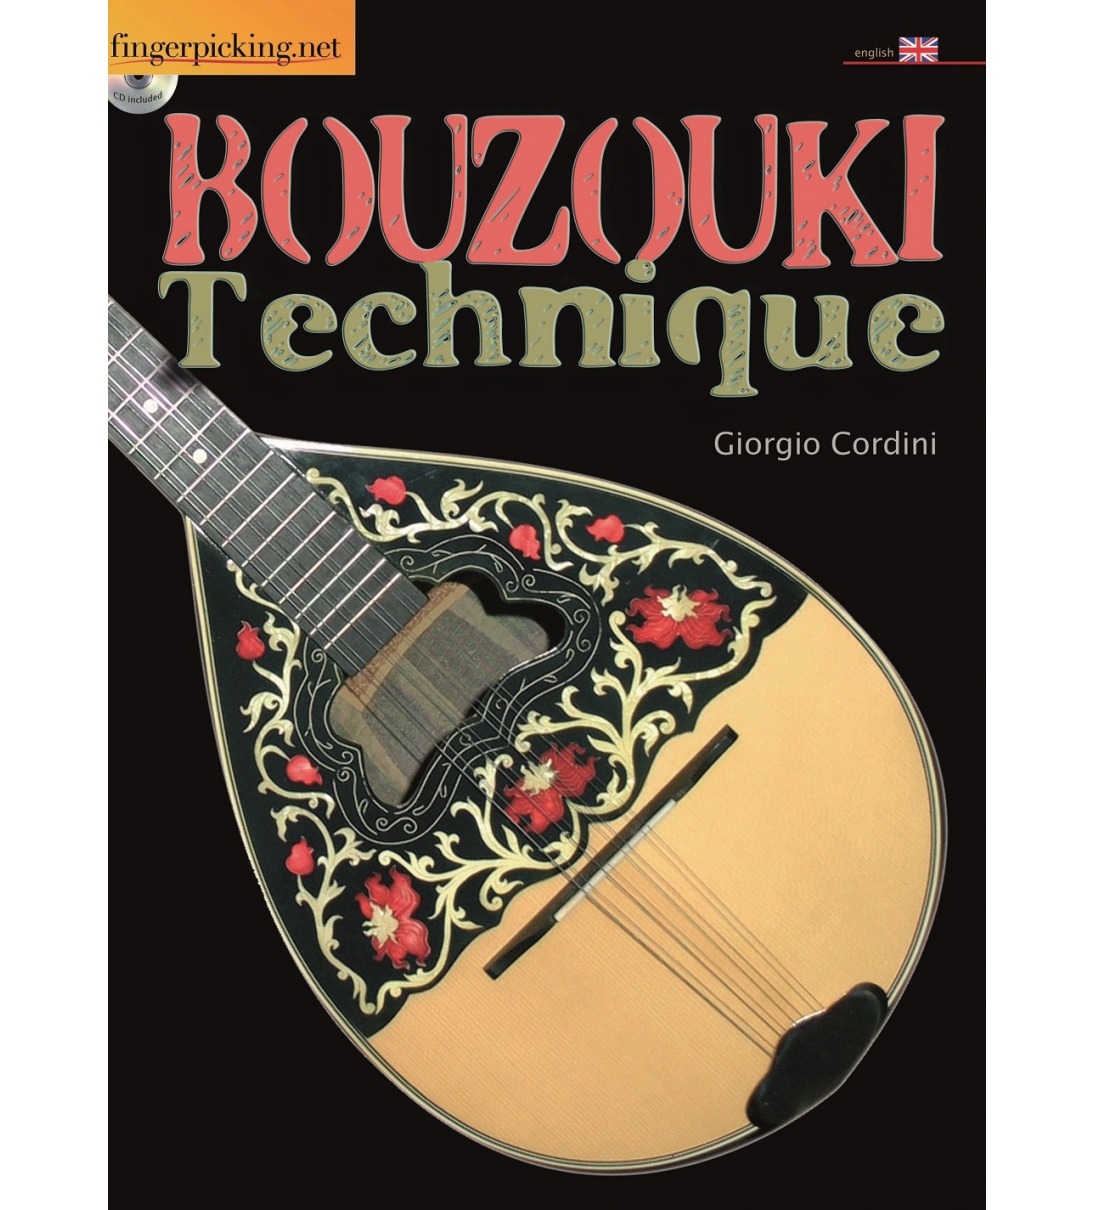 Bouzouki Technique [inglese]